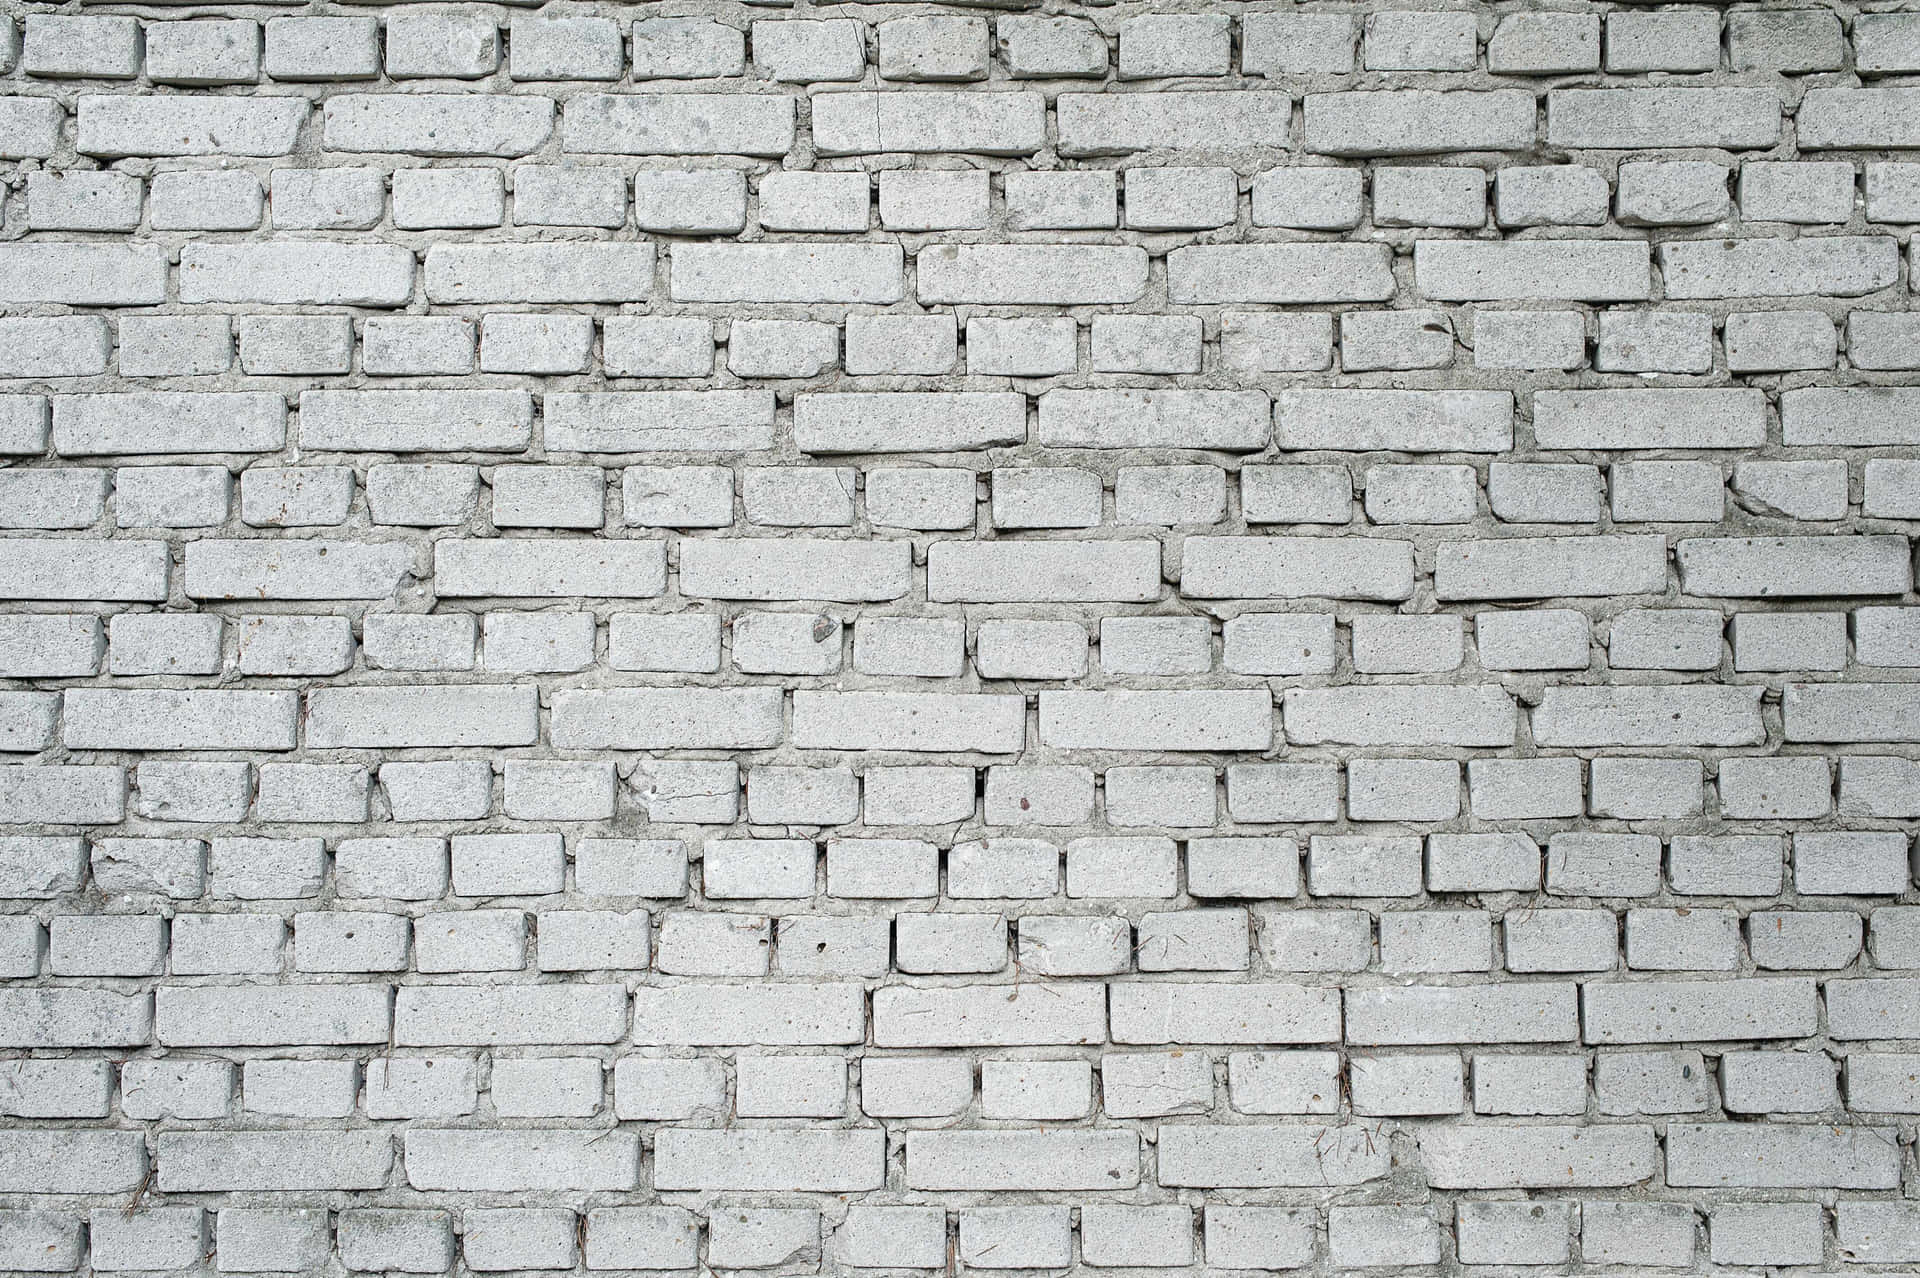 A White Brick Wall